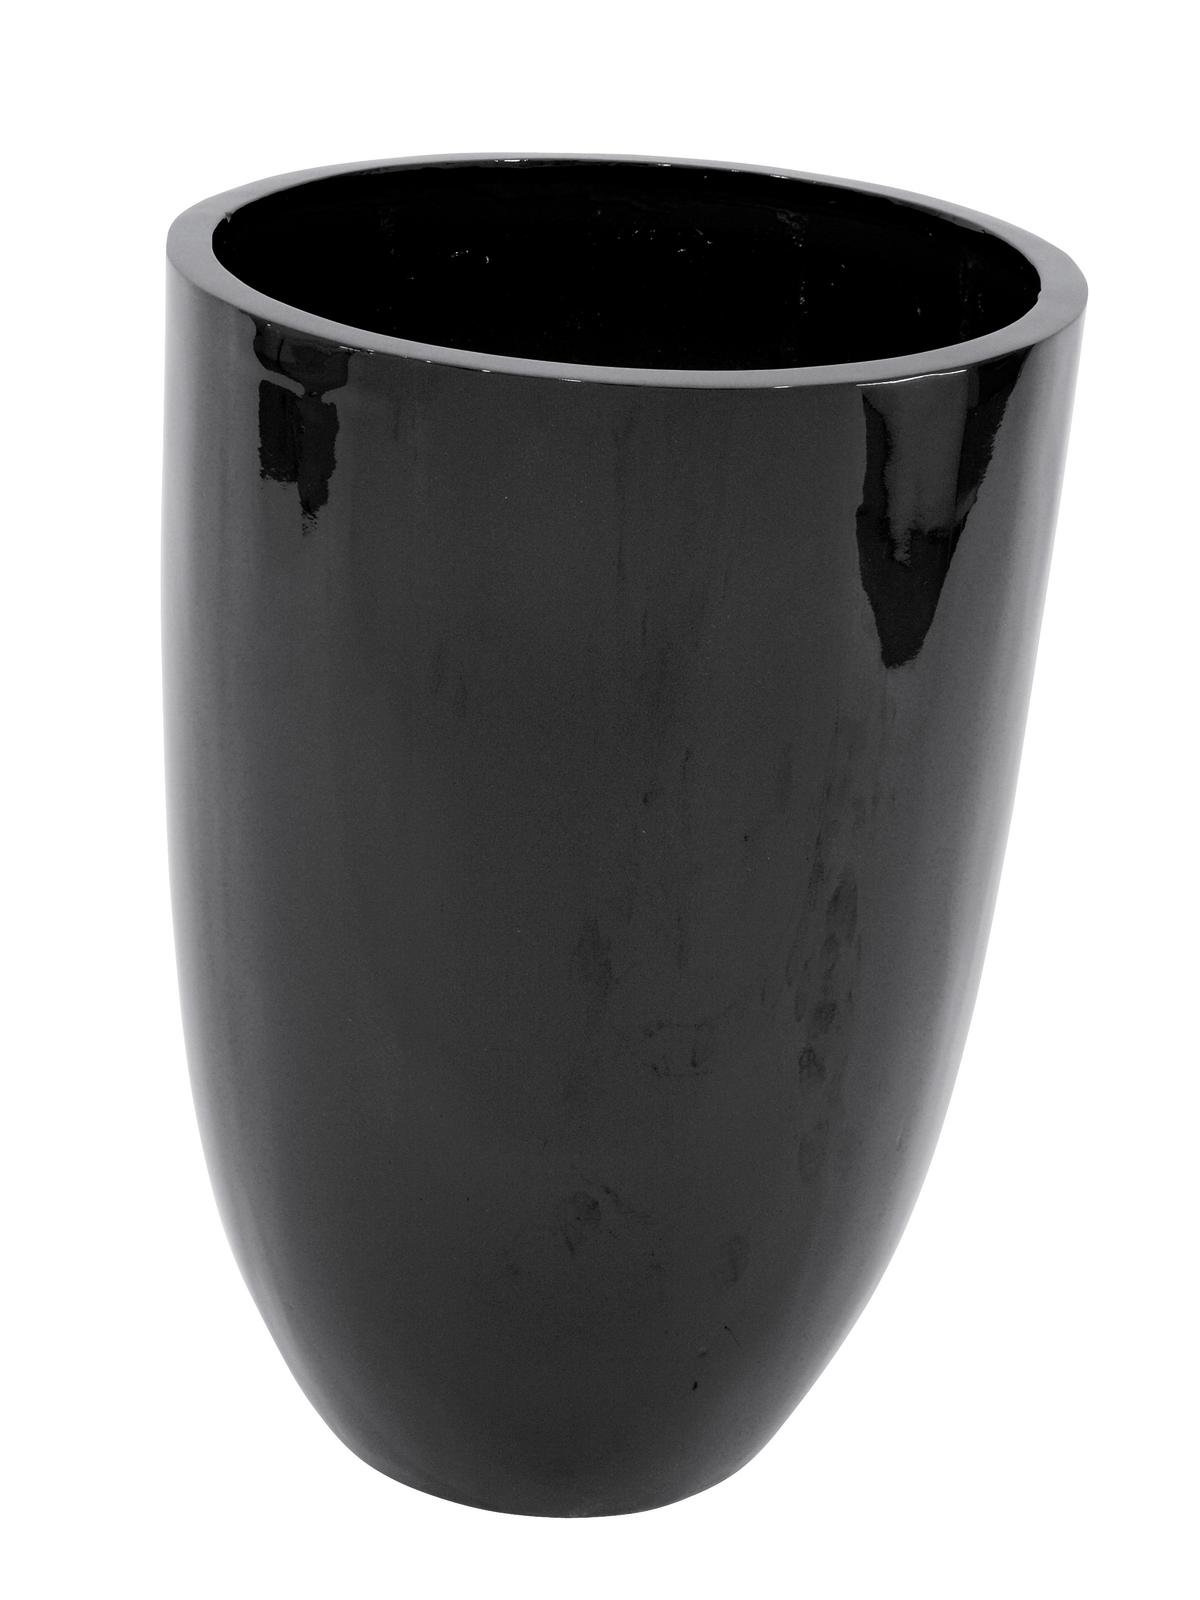 EUROPALMS LEICHTSIN CUP-69, shiny-black